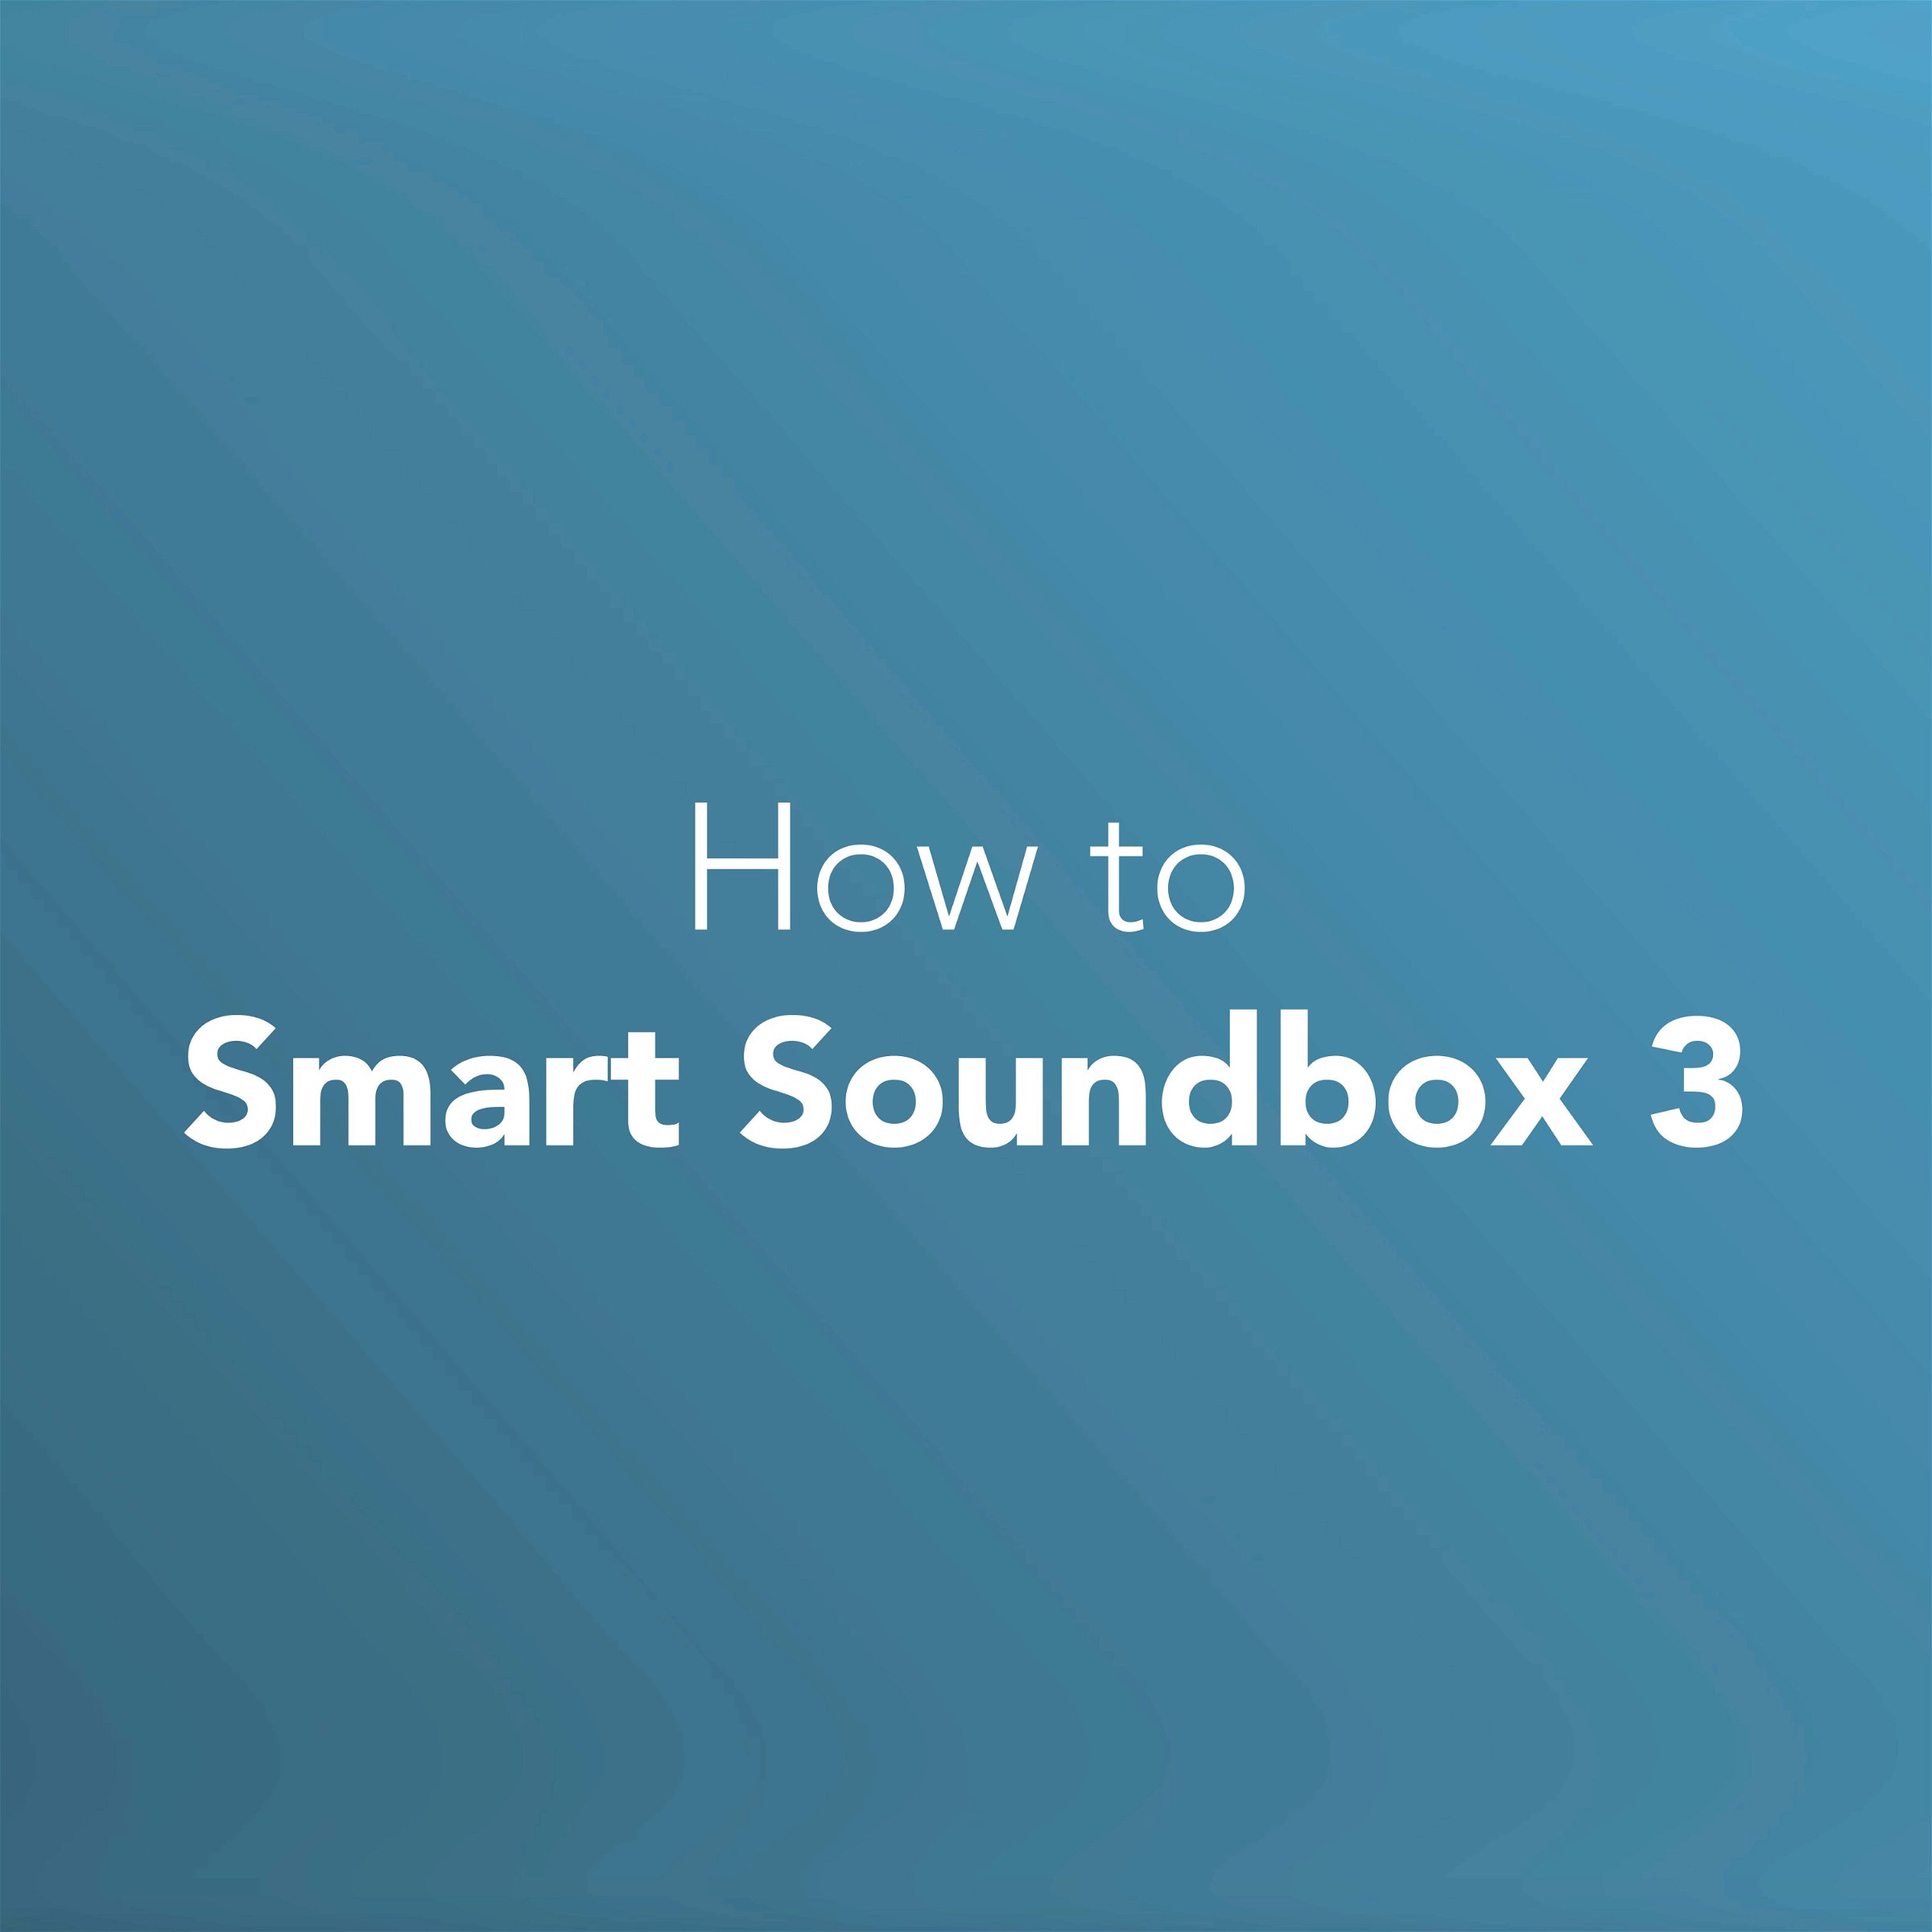 Smart Soundbox 3